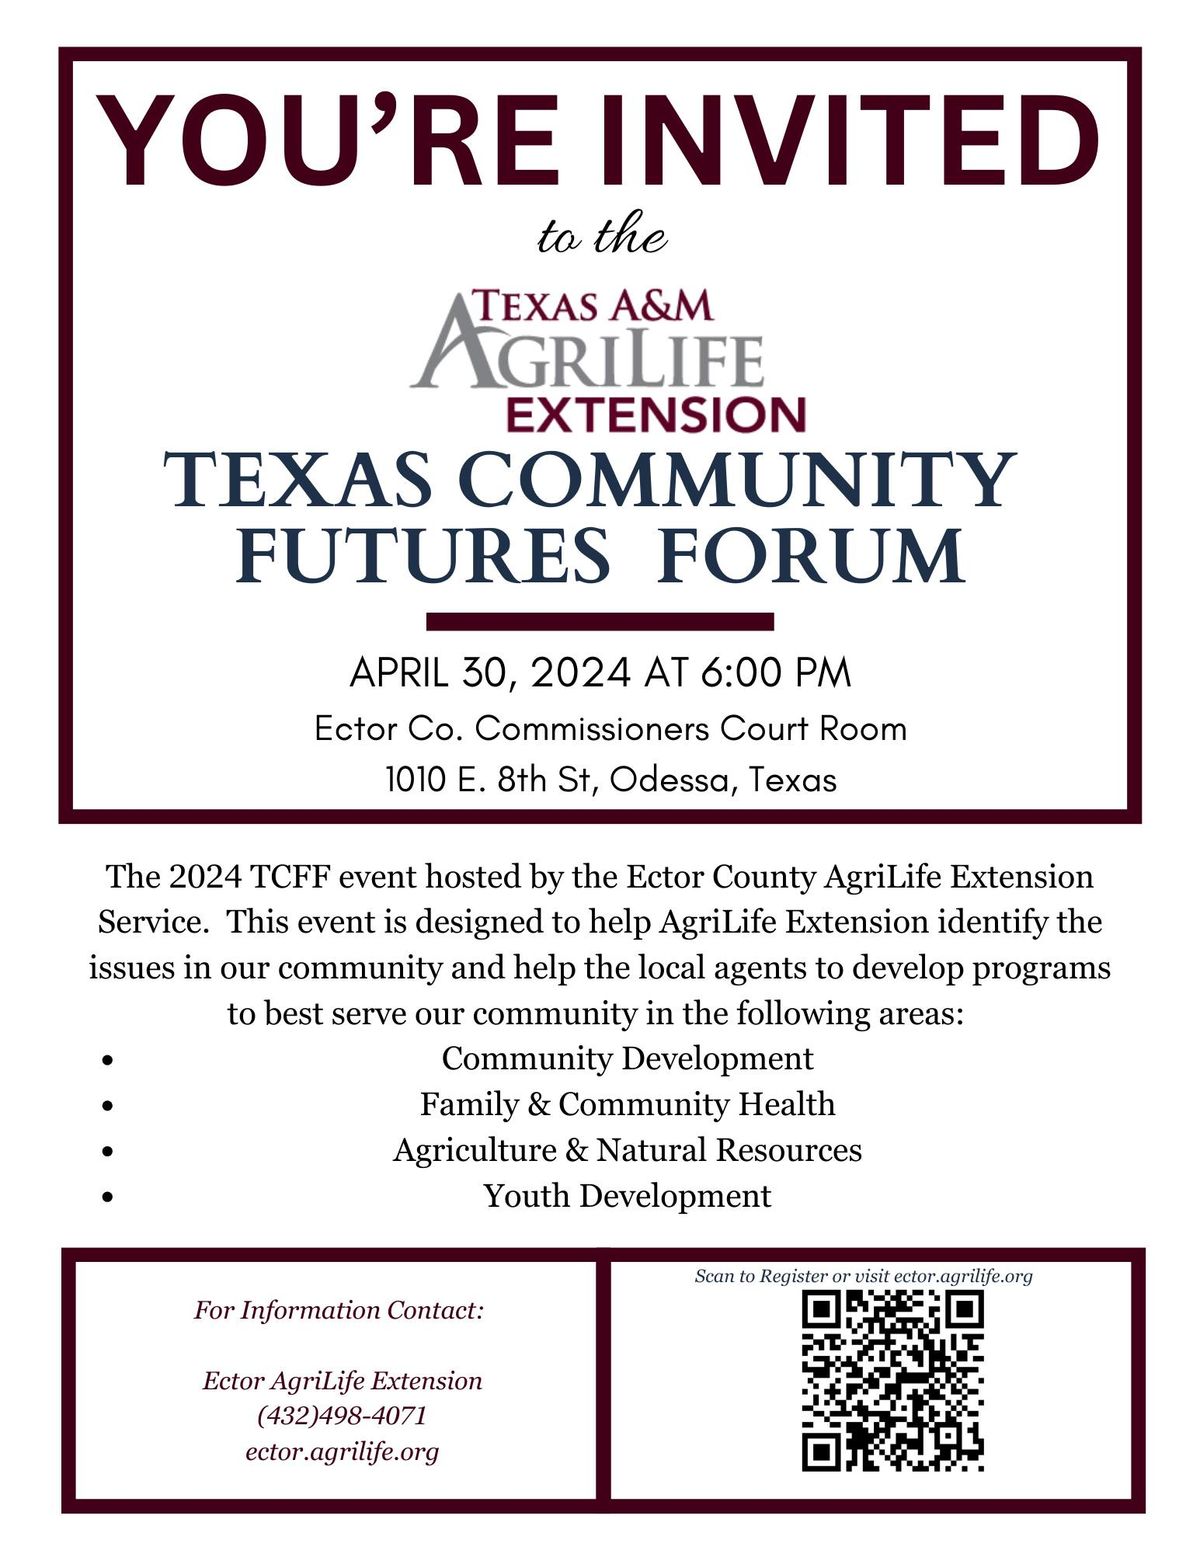 Ector County - Texas Community Futures Forum